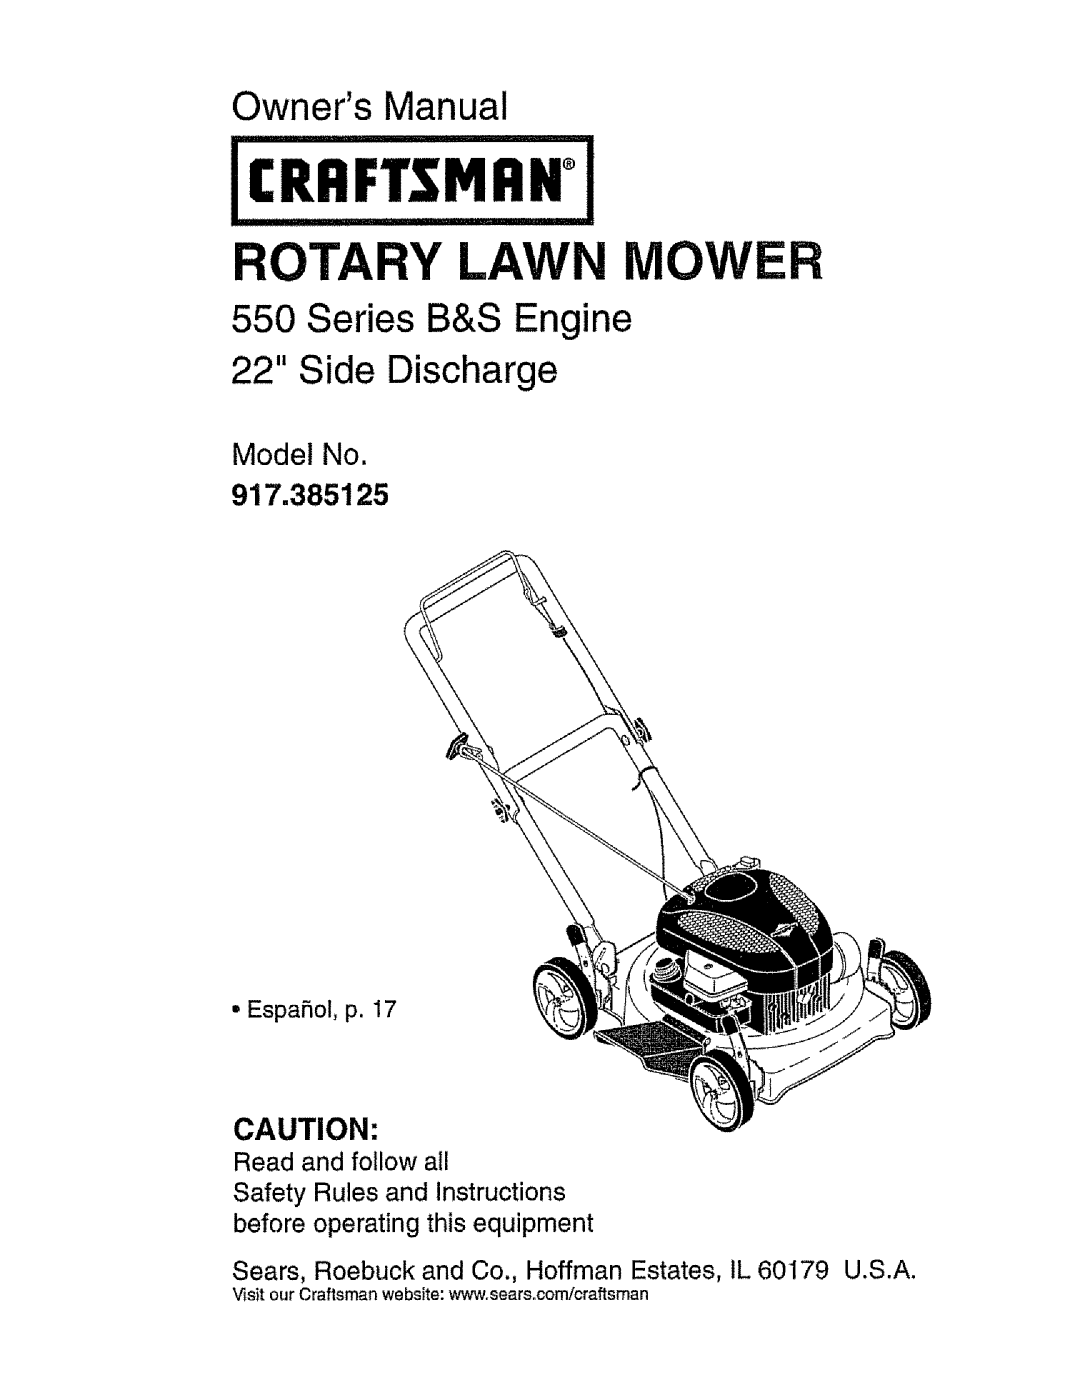 Craftsman 917.385125 owner manual Owners Manual, Series B&S Engine 22 Side Discharge, Model No, Craftsman 